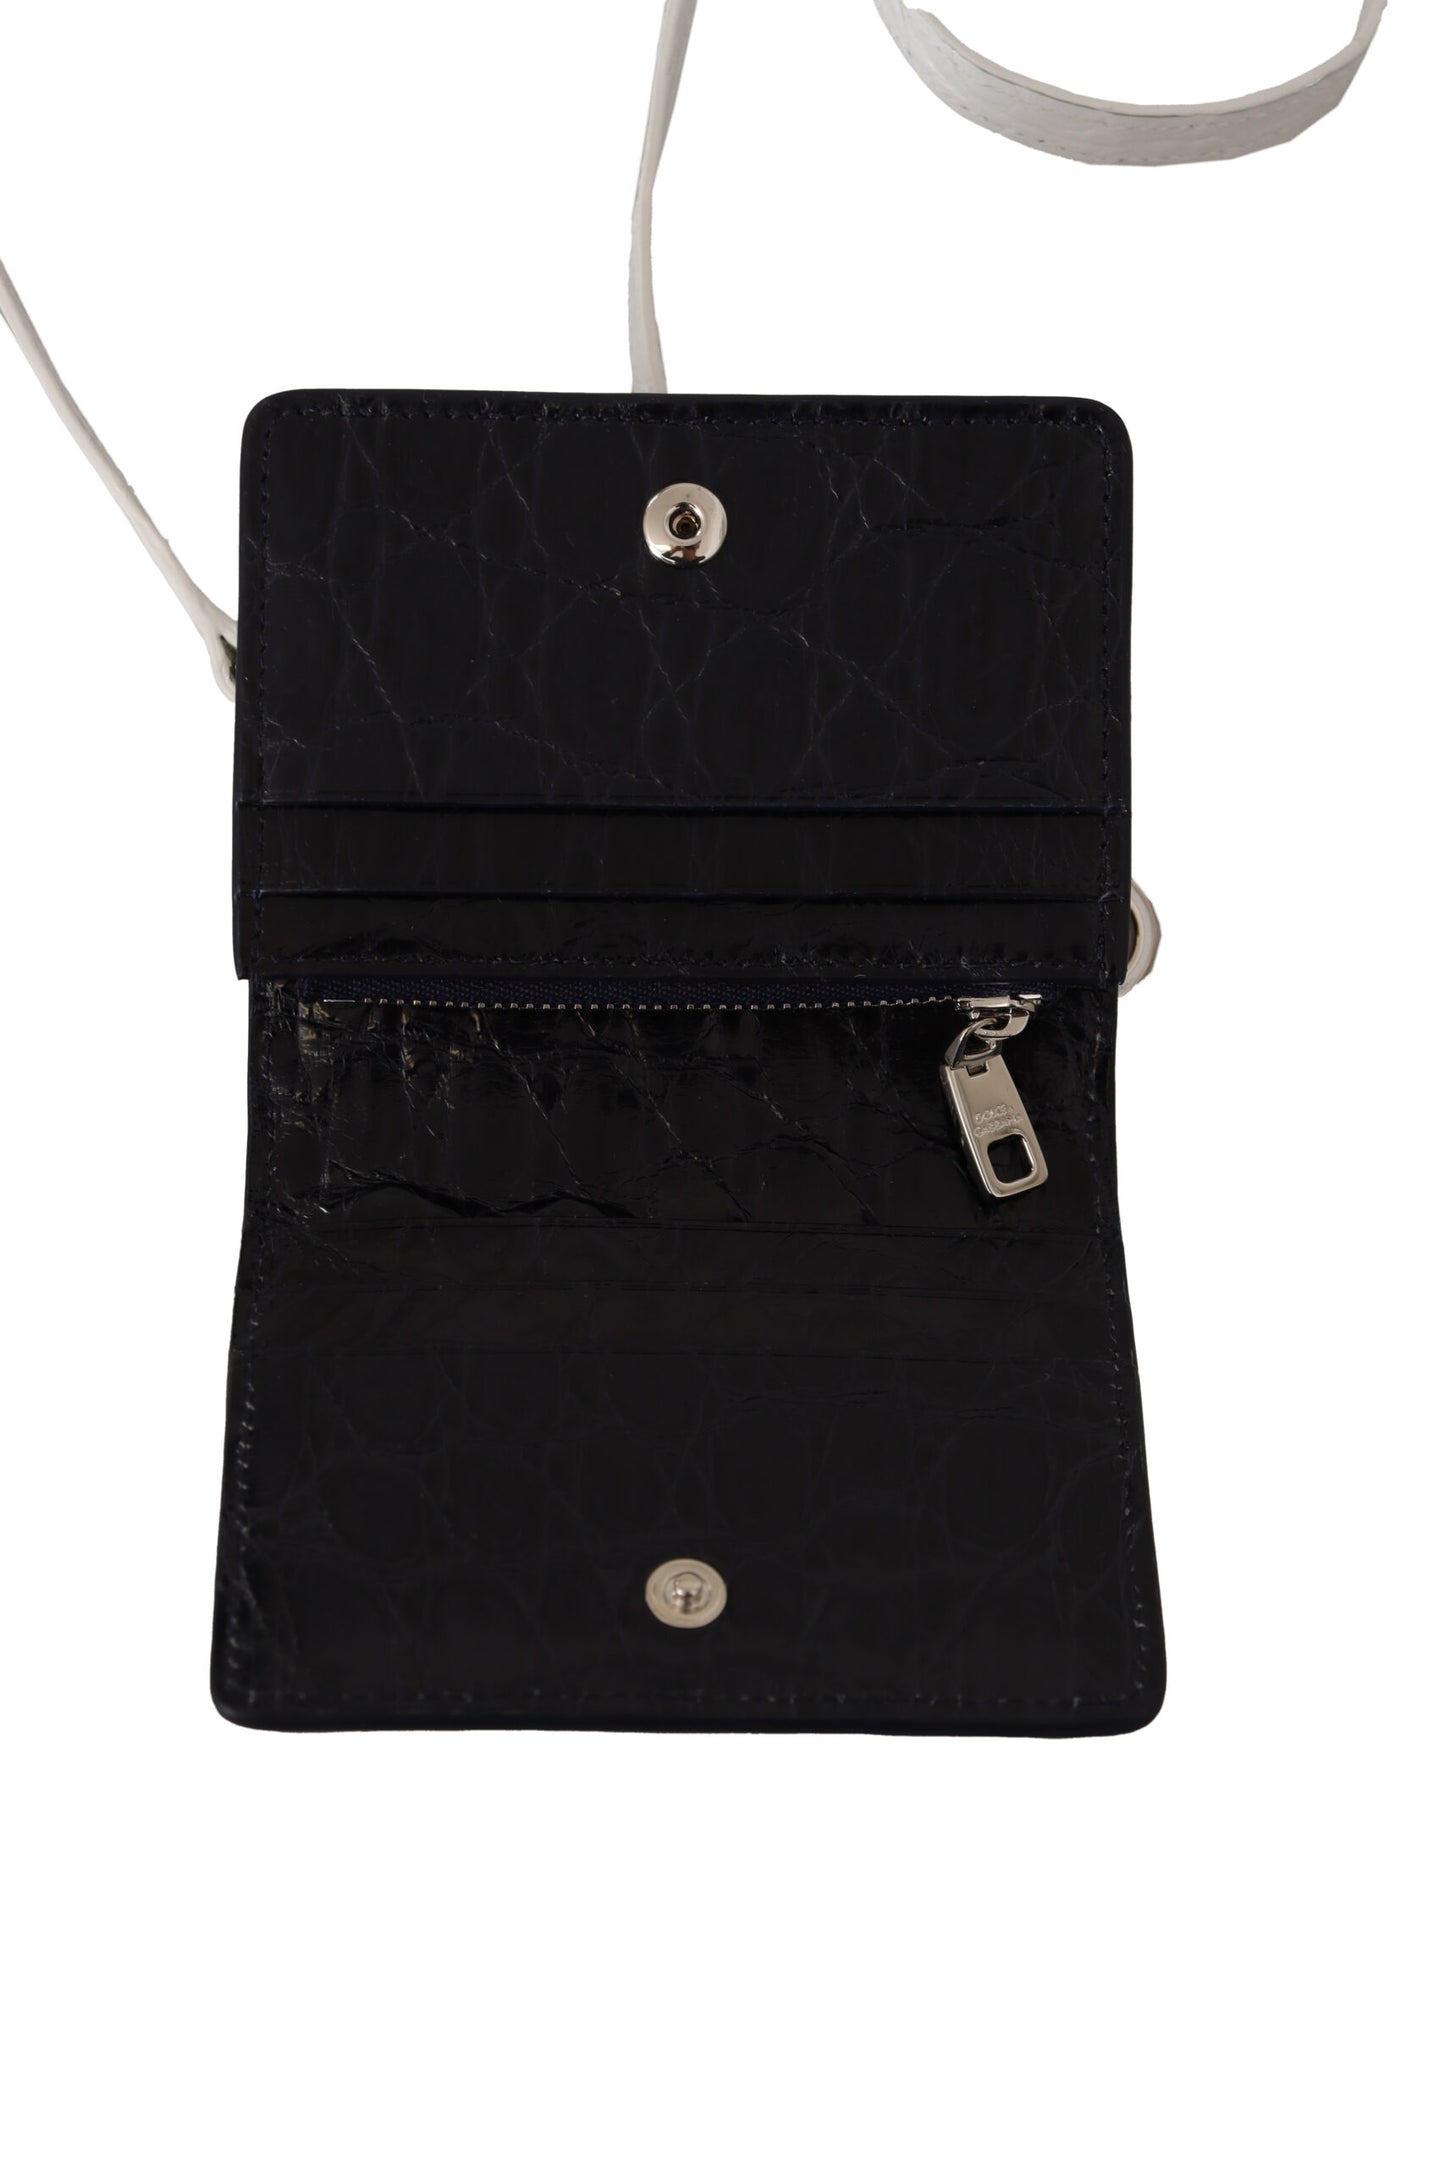 Dolce & Gabbana bleu blanc caiman en cuir de carte en cuir porte-carte portefeuille